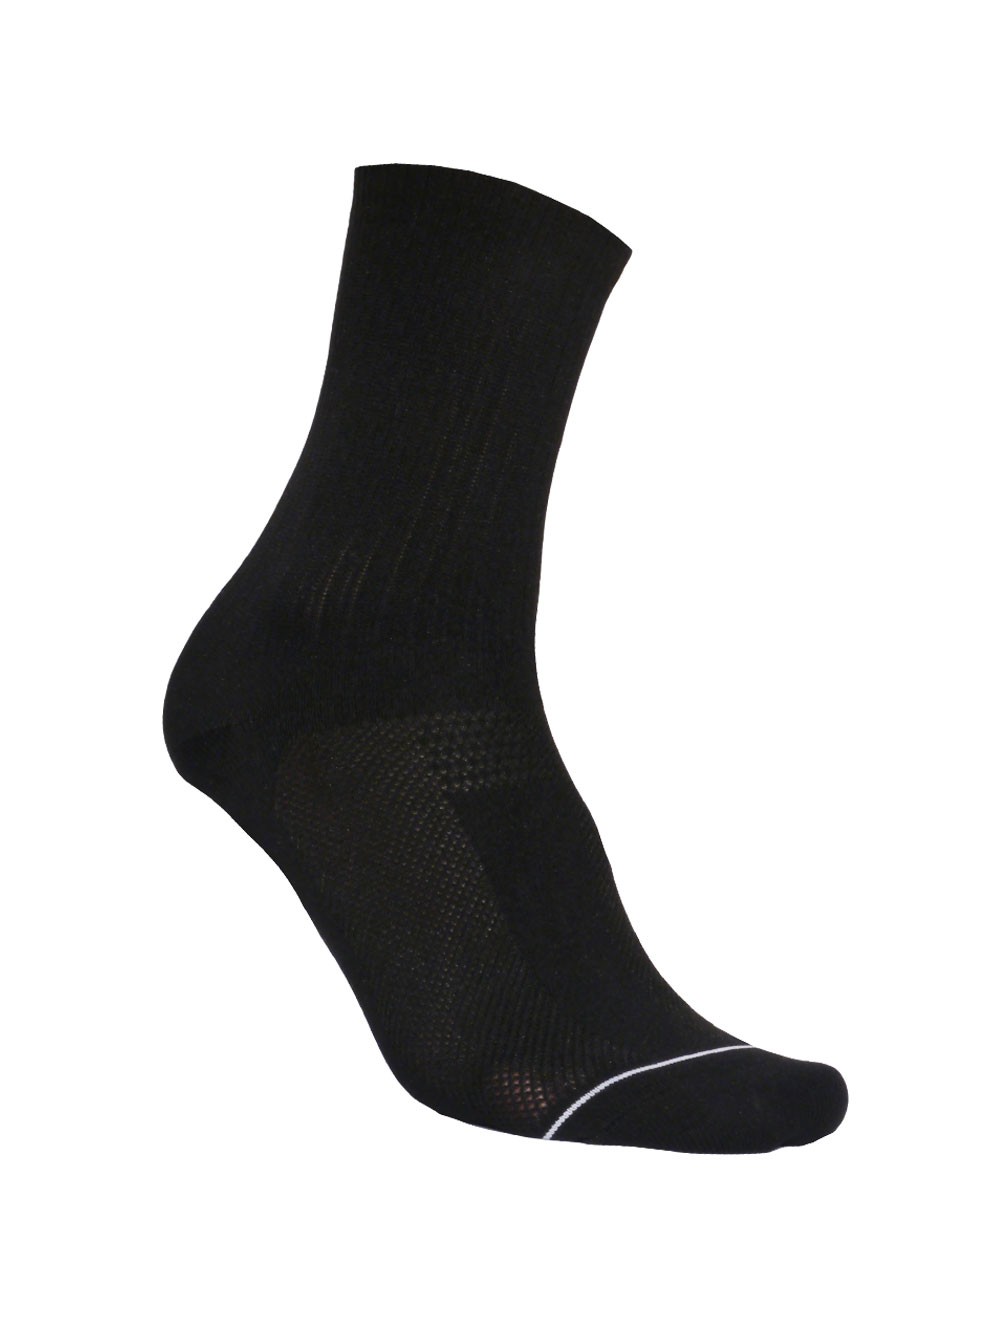 New Black & Grey Striped Cycling Socks Size 7-13 